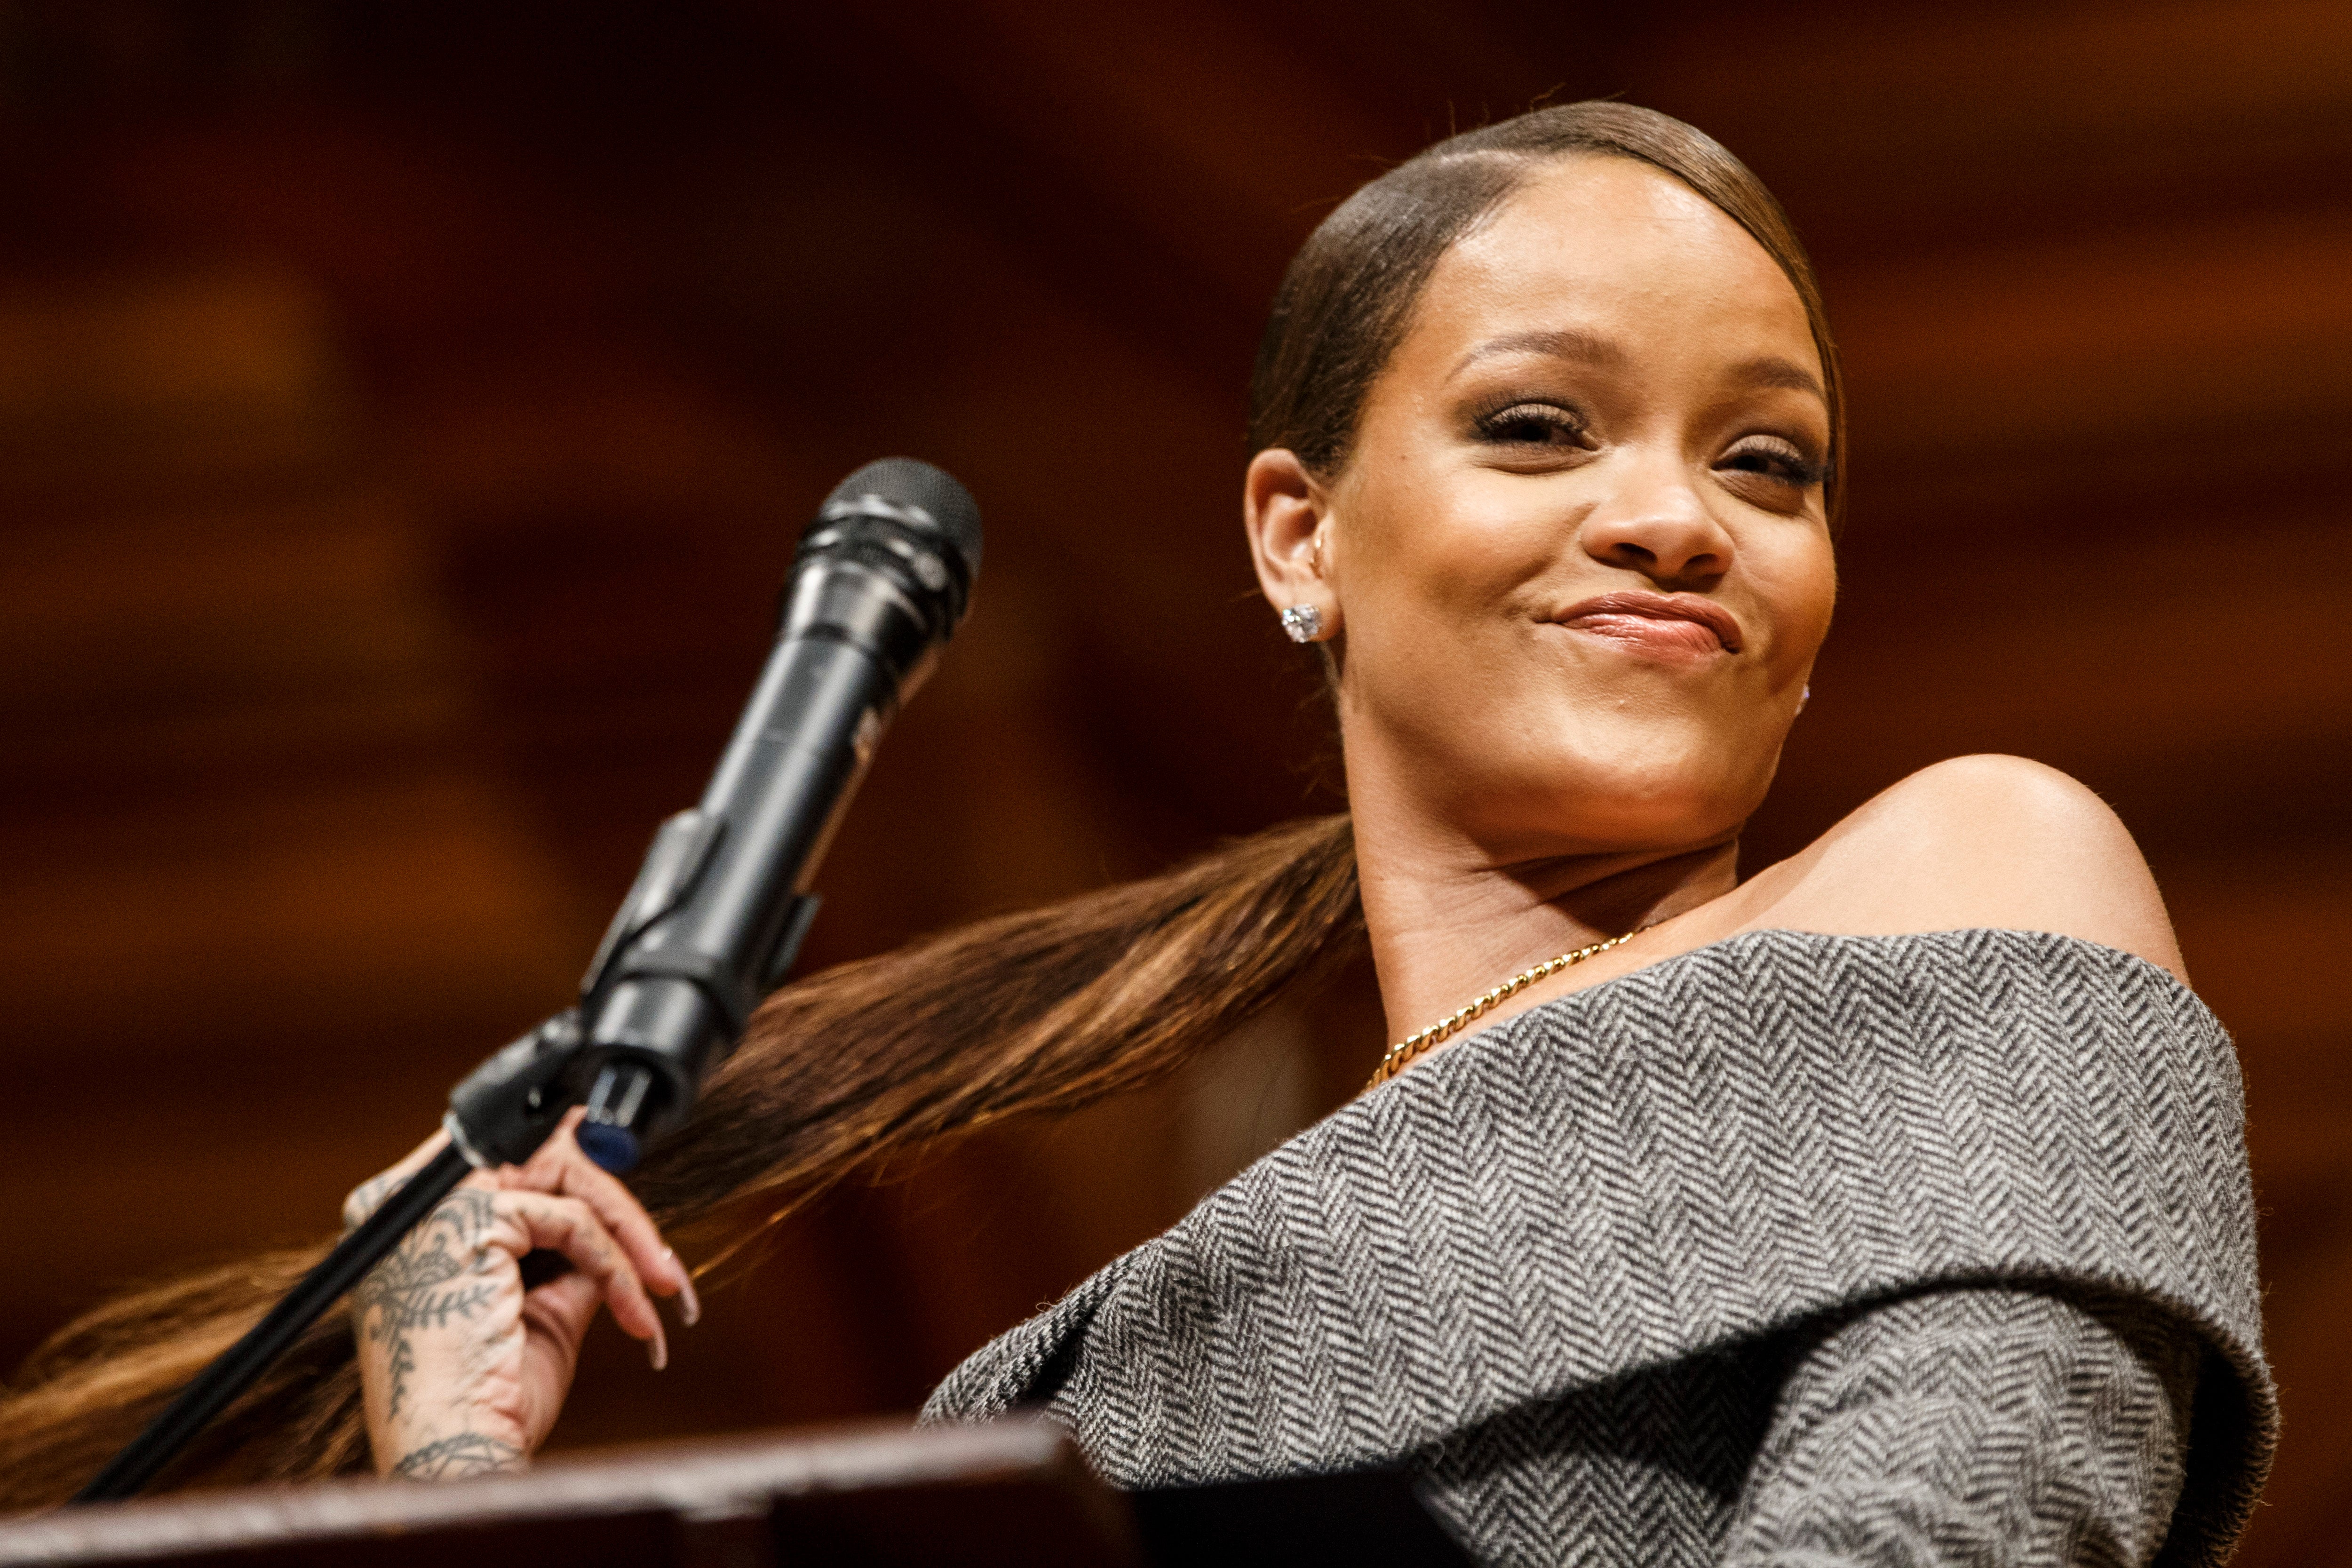 Highlights From Rihanna’s Beautiful Humanitarian Speech At Harvard